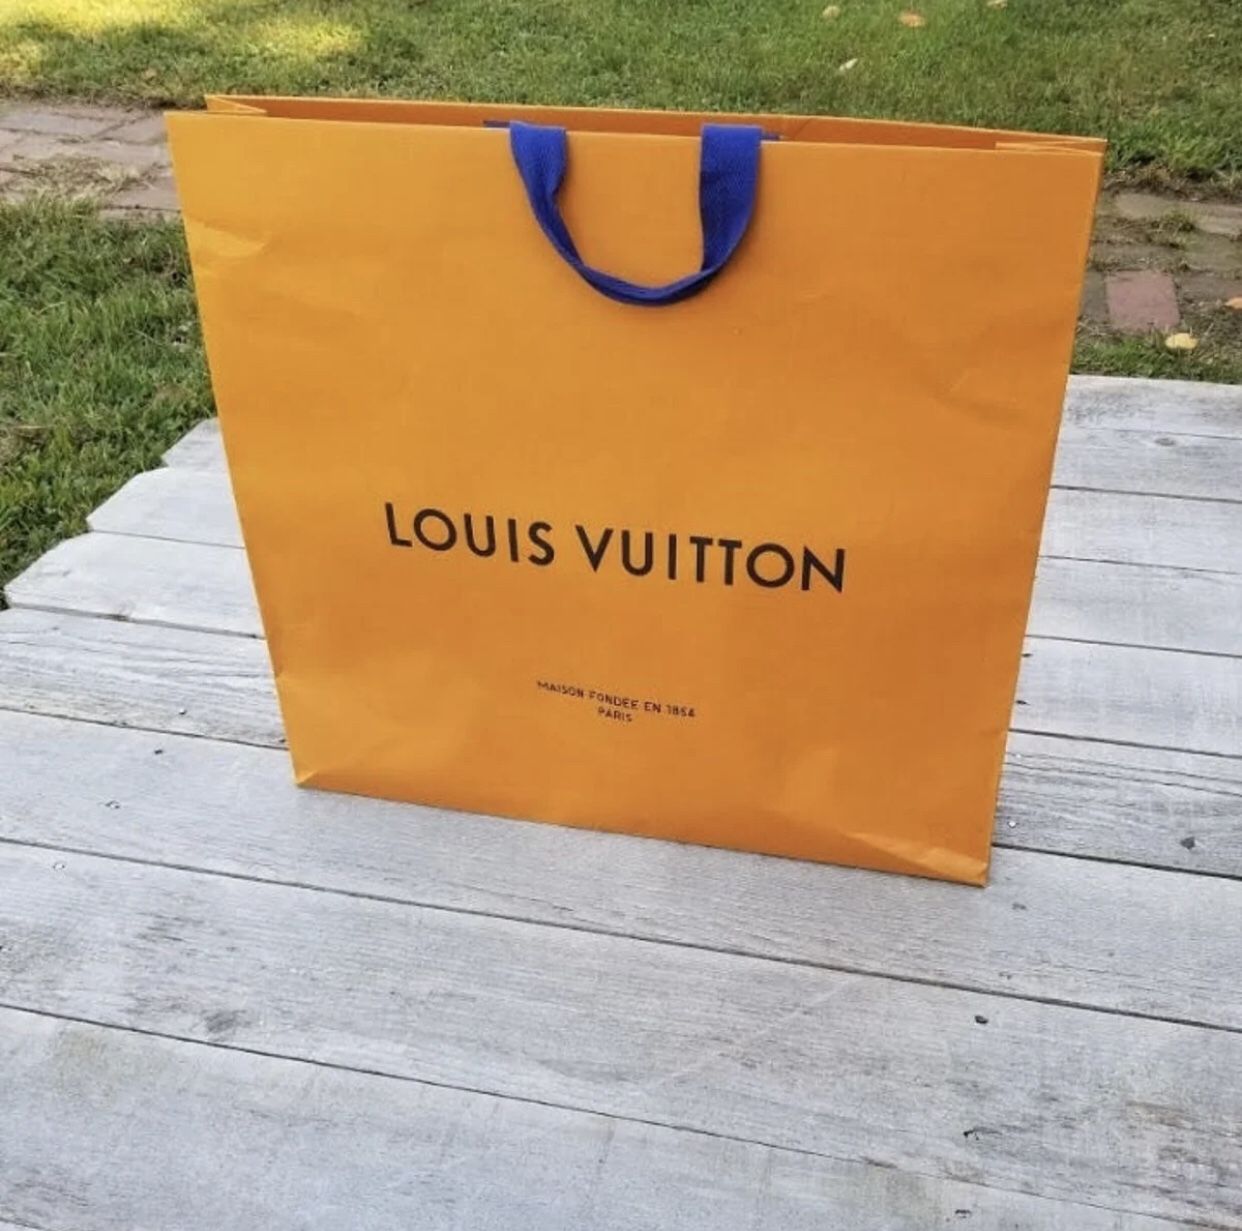 LOUIS VUITTON Shopping Bag/Tote (authentic)